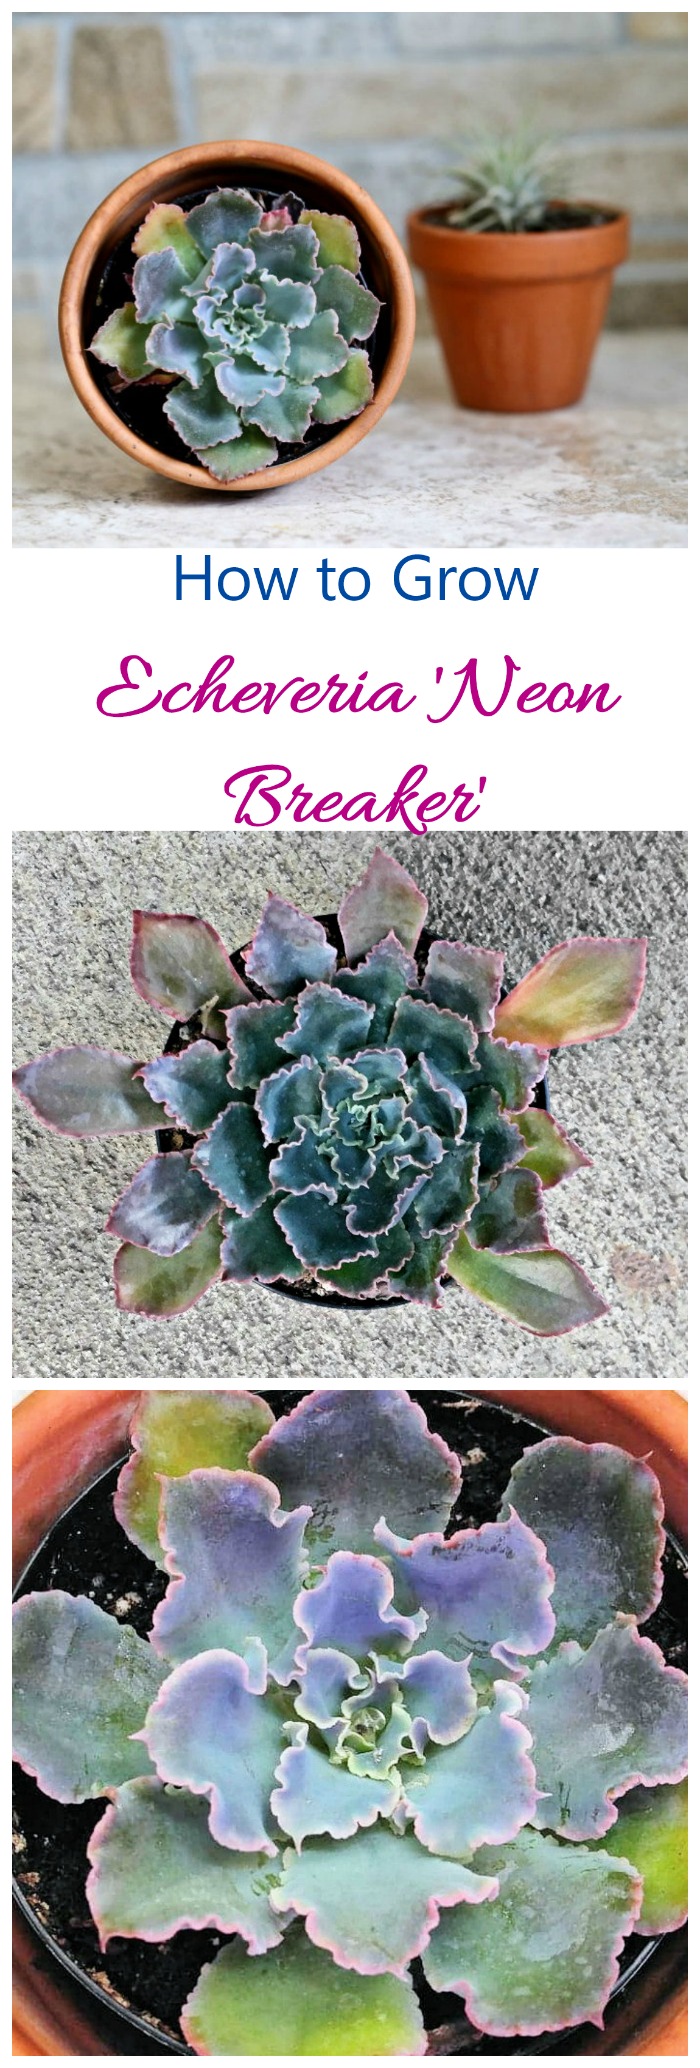 Echeveria Neon Breakers - Cultiva esta increíble suculenta de gran colorido